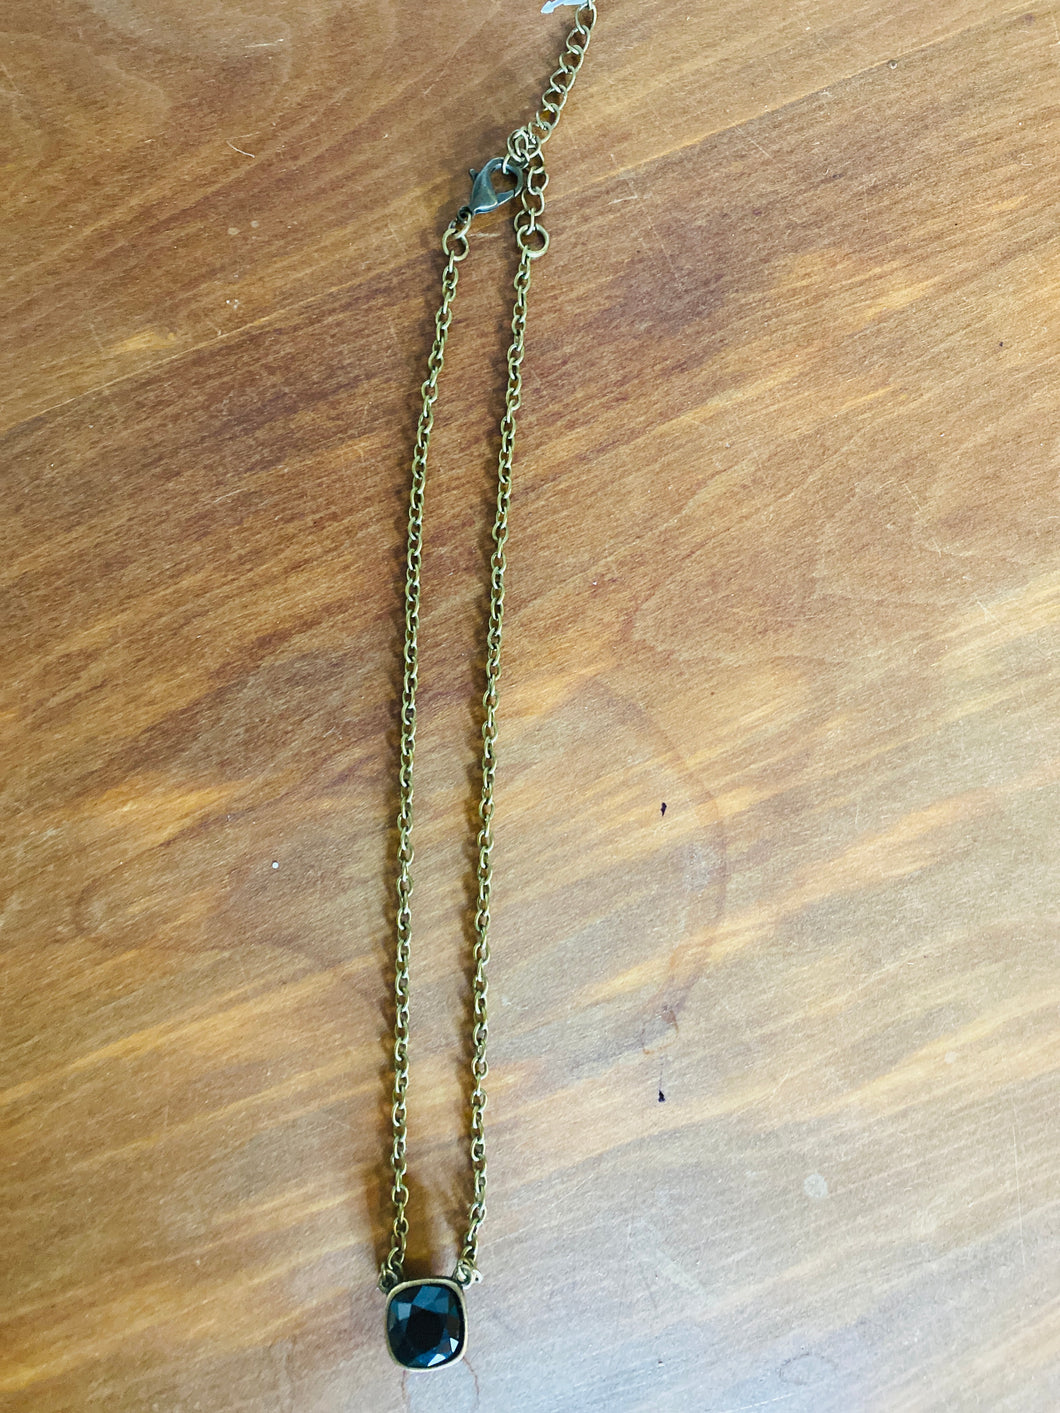 Bronze Short Chain Necklace with Black Pendant